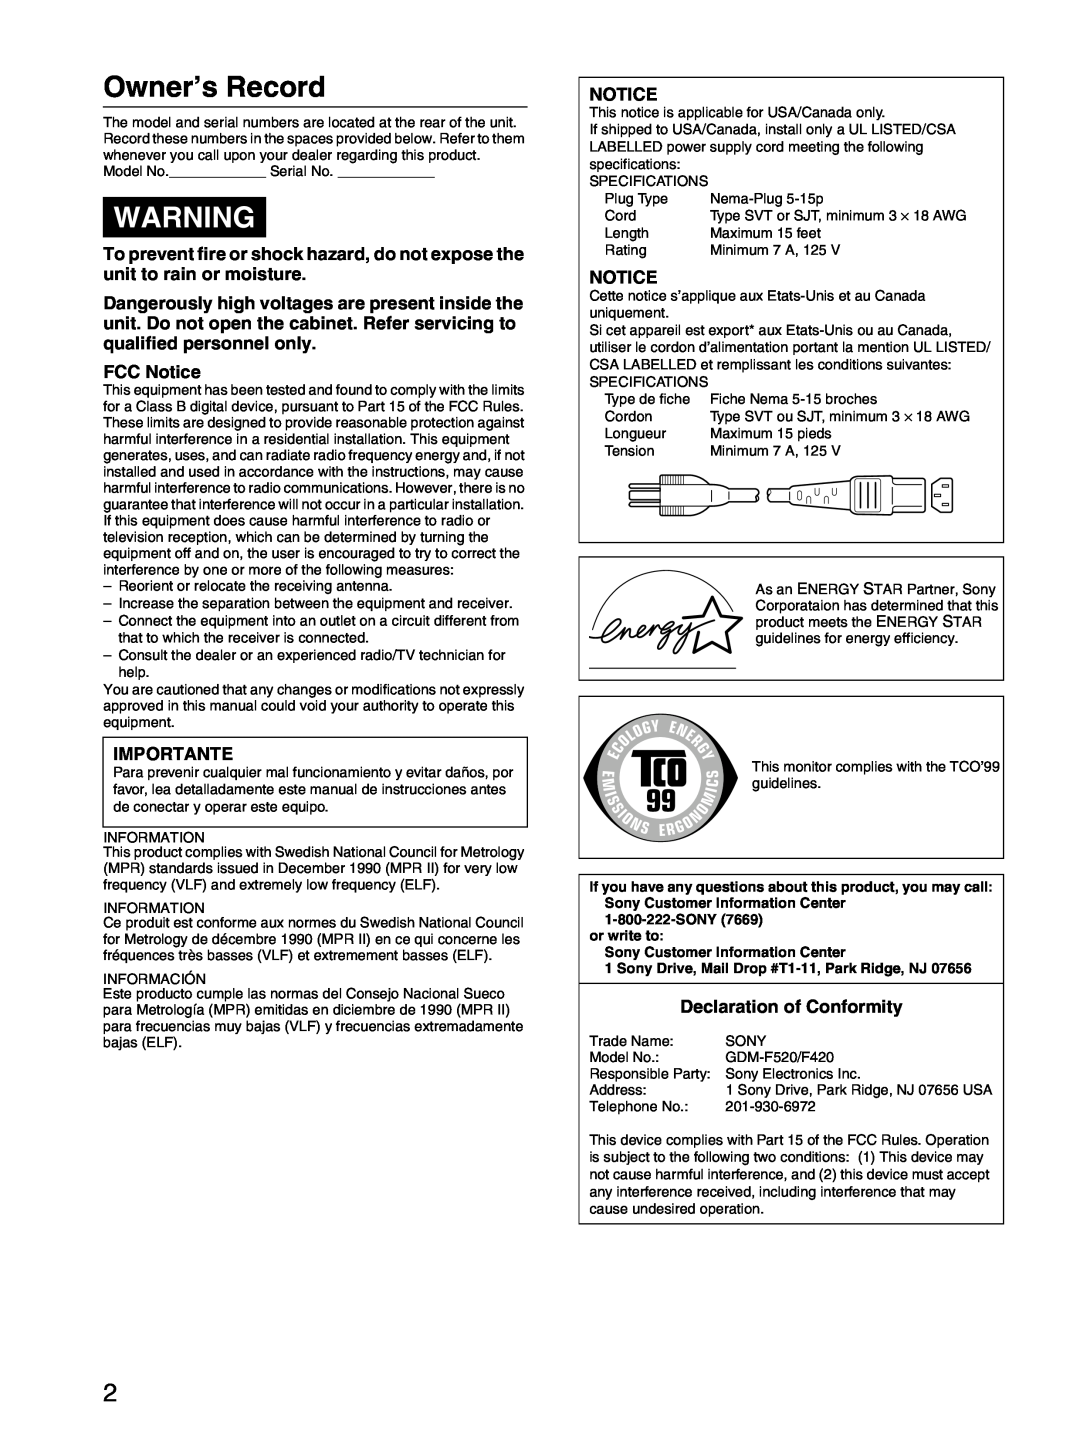 Sony GDM-F520 manual FCC Notice, Importante, Declaration of Conformity, Owner’s Record 